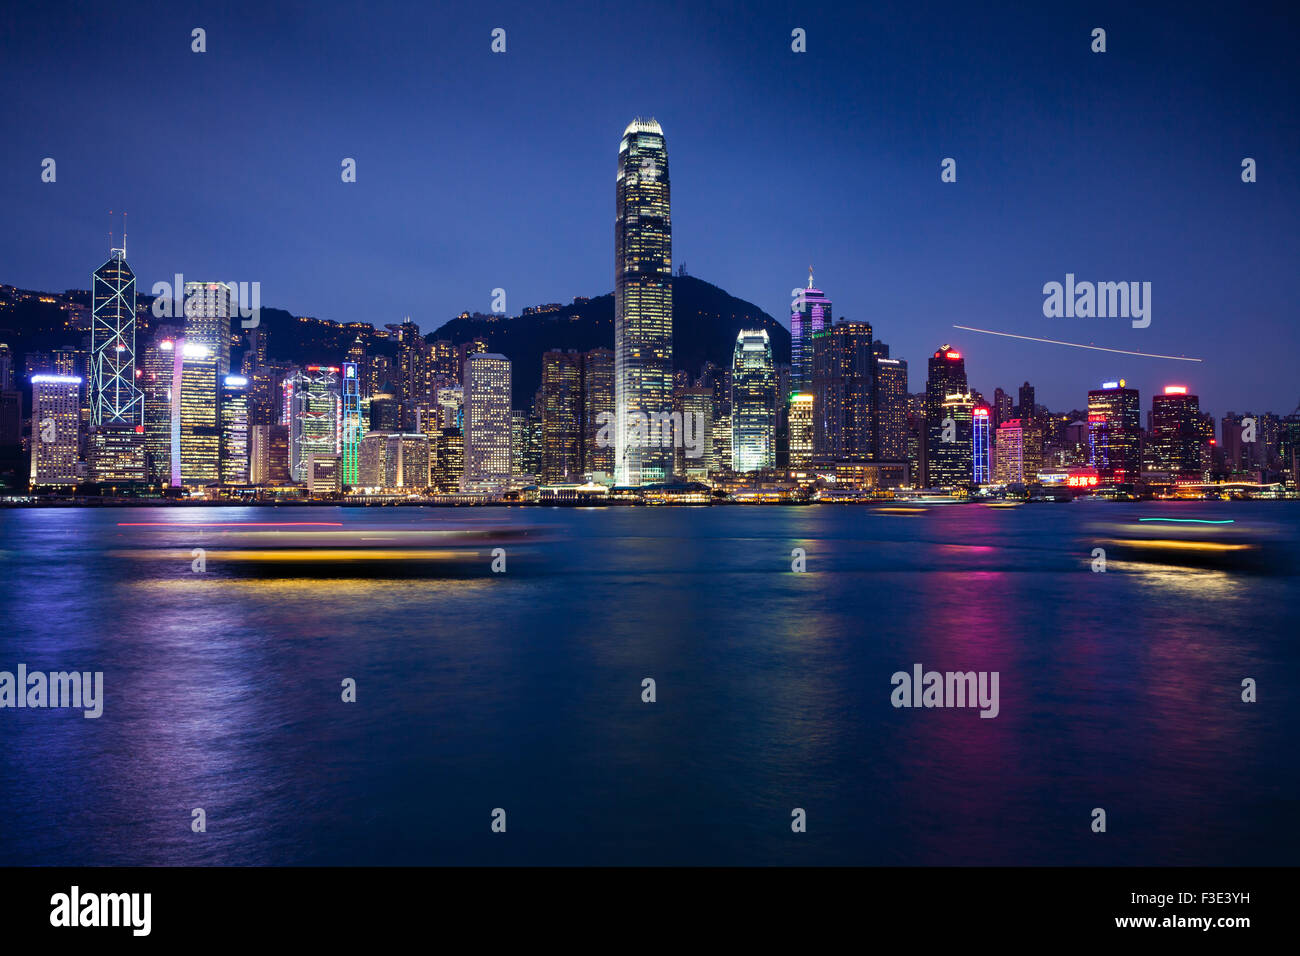 Regione Amministrativa Speciale di Hong Kong, Hong Kong - 23 February, 2014: scena notturna di Hong Kong Island, vista da Tsim Sha Tsui Promenade, Kowloon Foto Stock